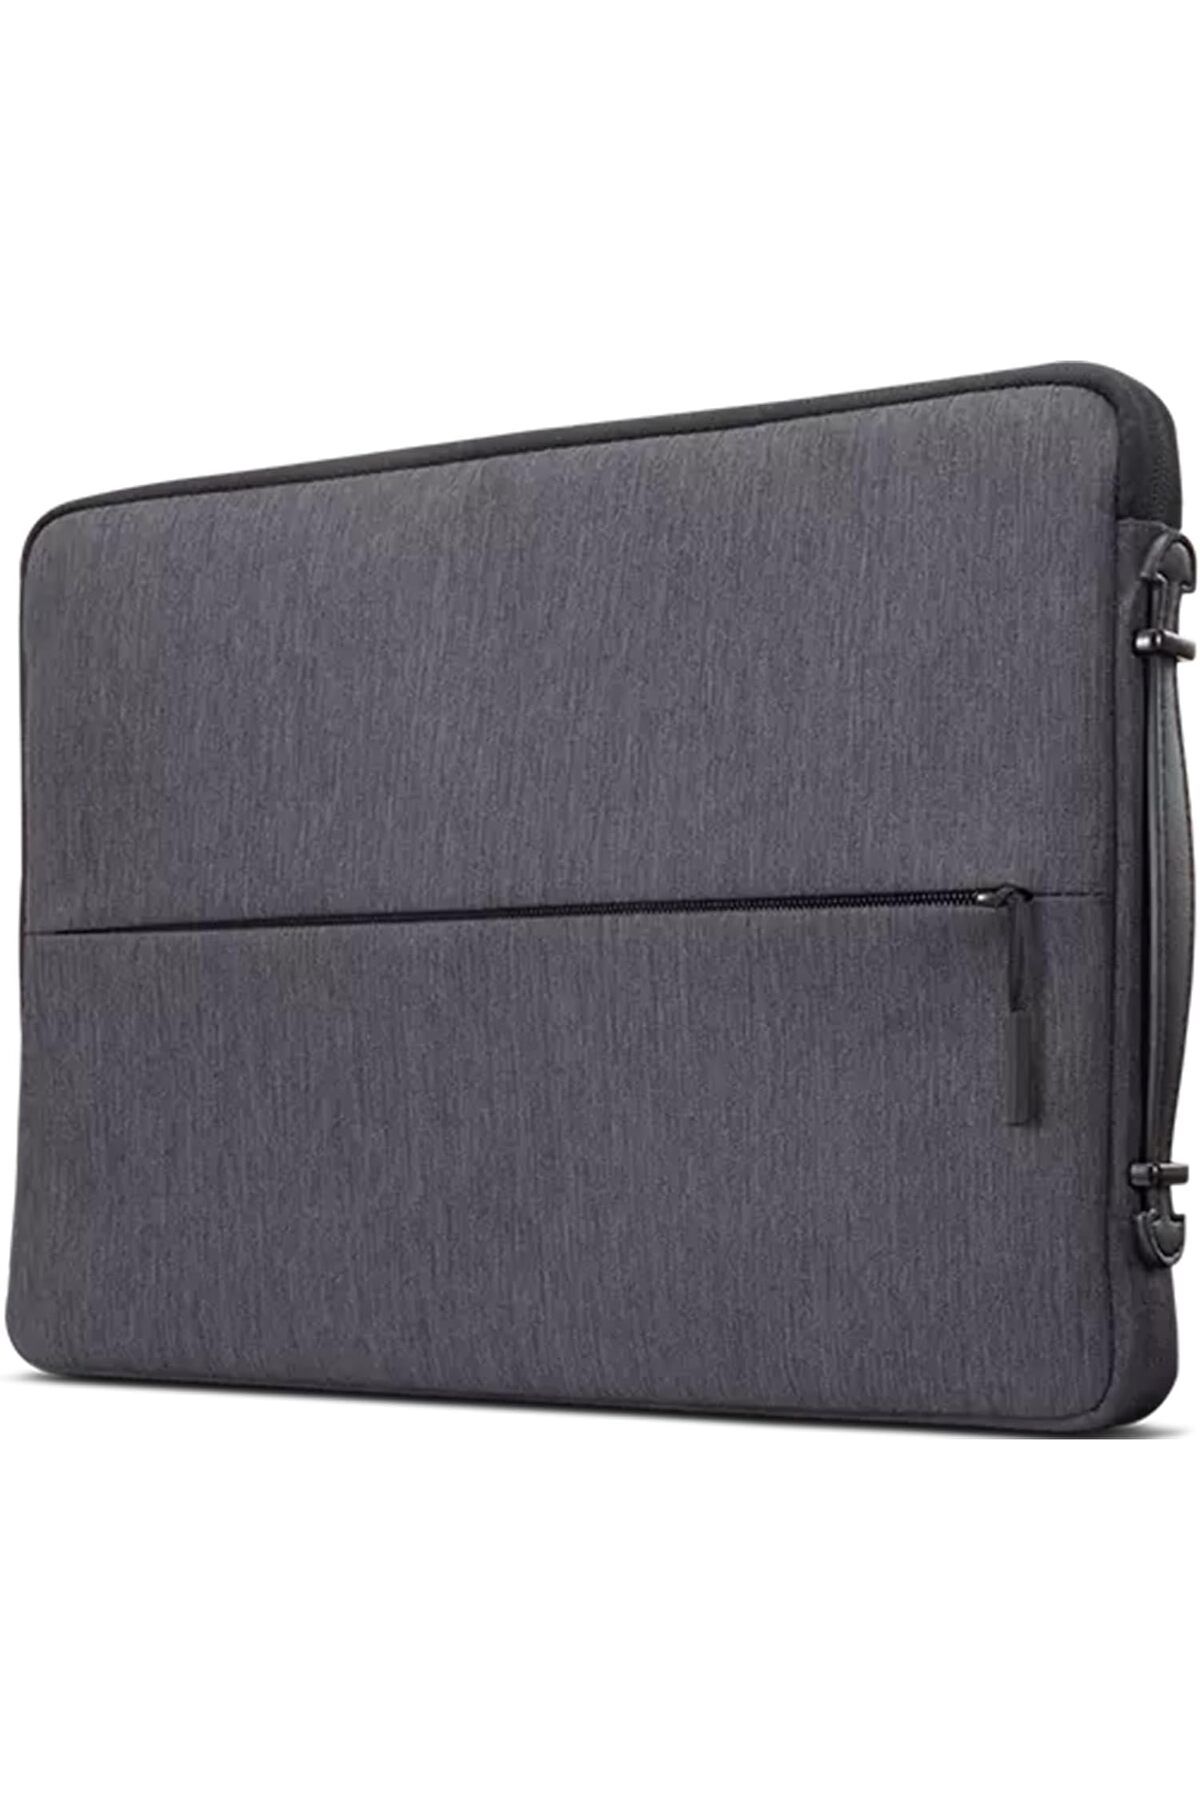 LENOVO [çanta] Laptop Urban Sleeve Case (SU GEÇİRMEZ)